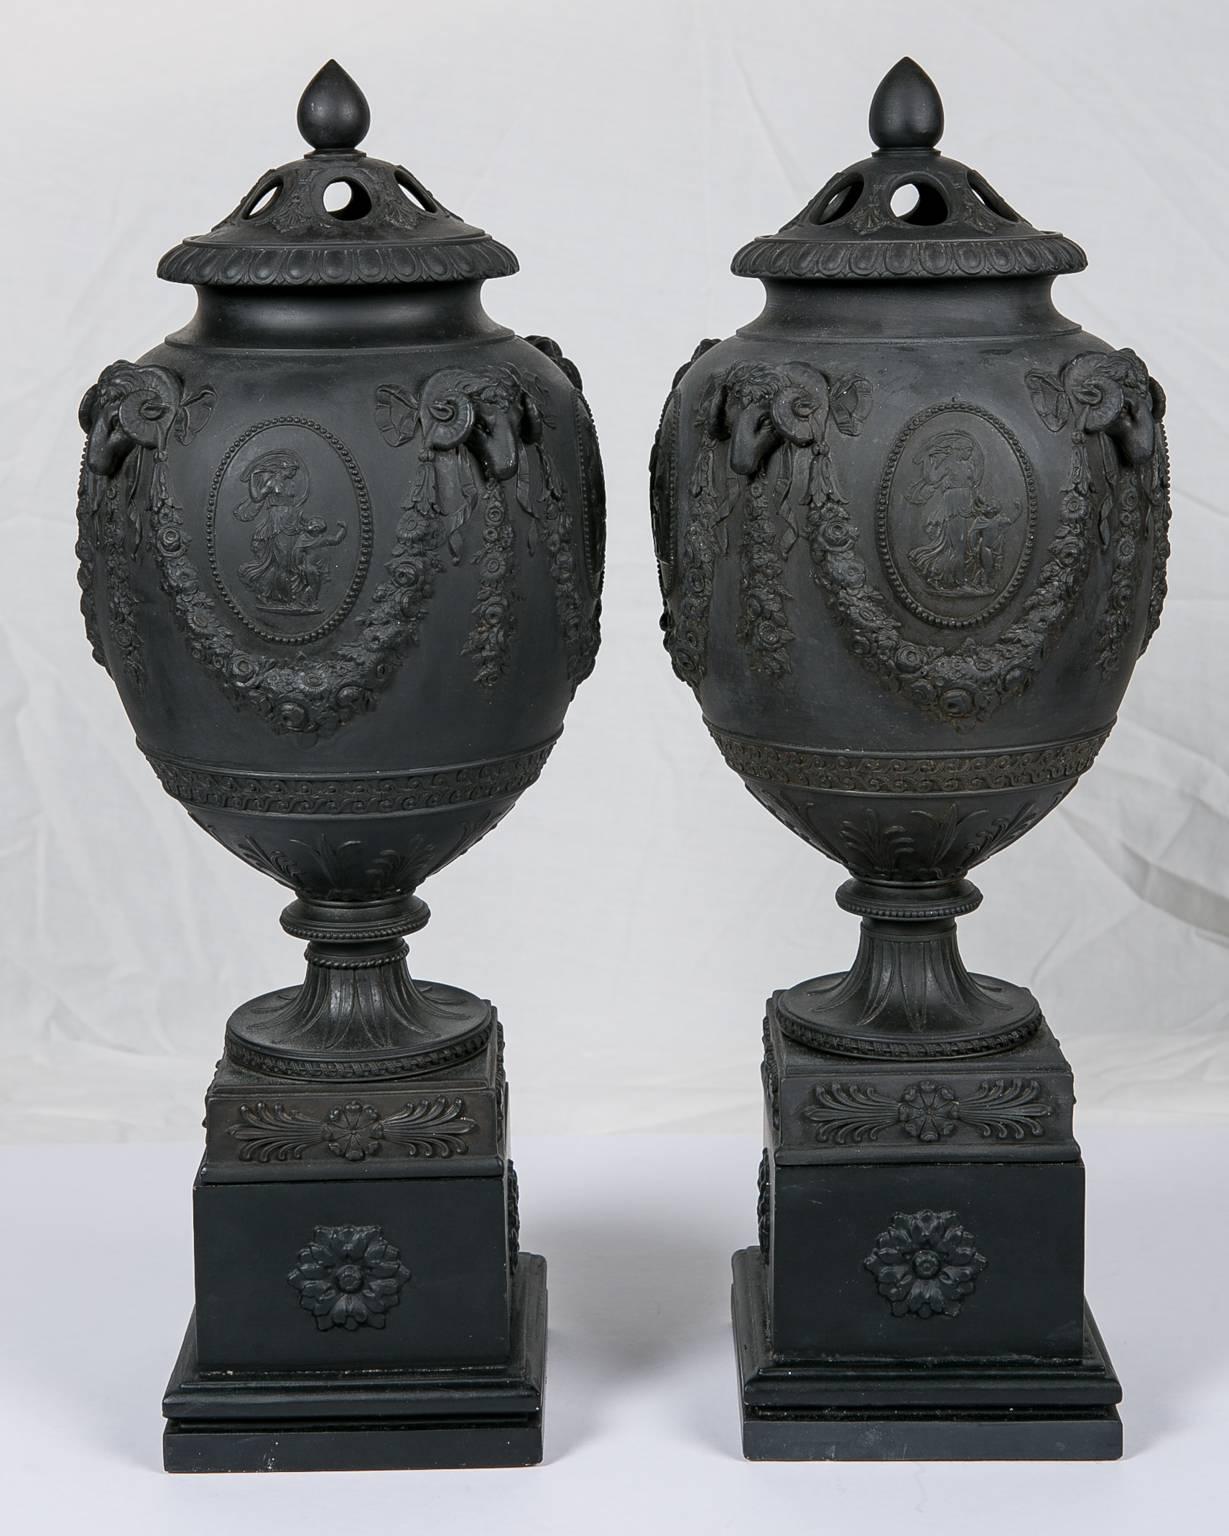 Molded Wedgwood Black Basalt Urns Made in England circa 1820